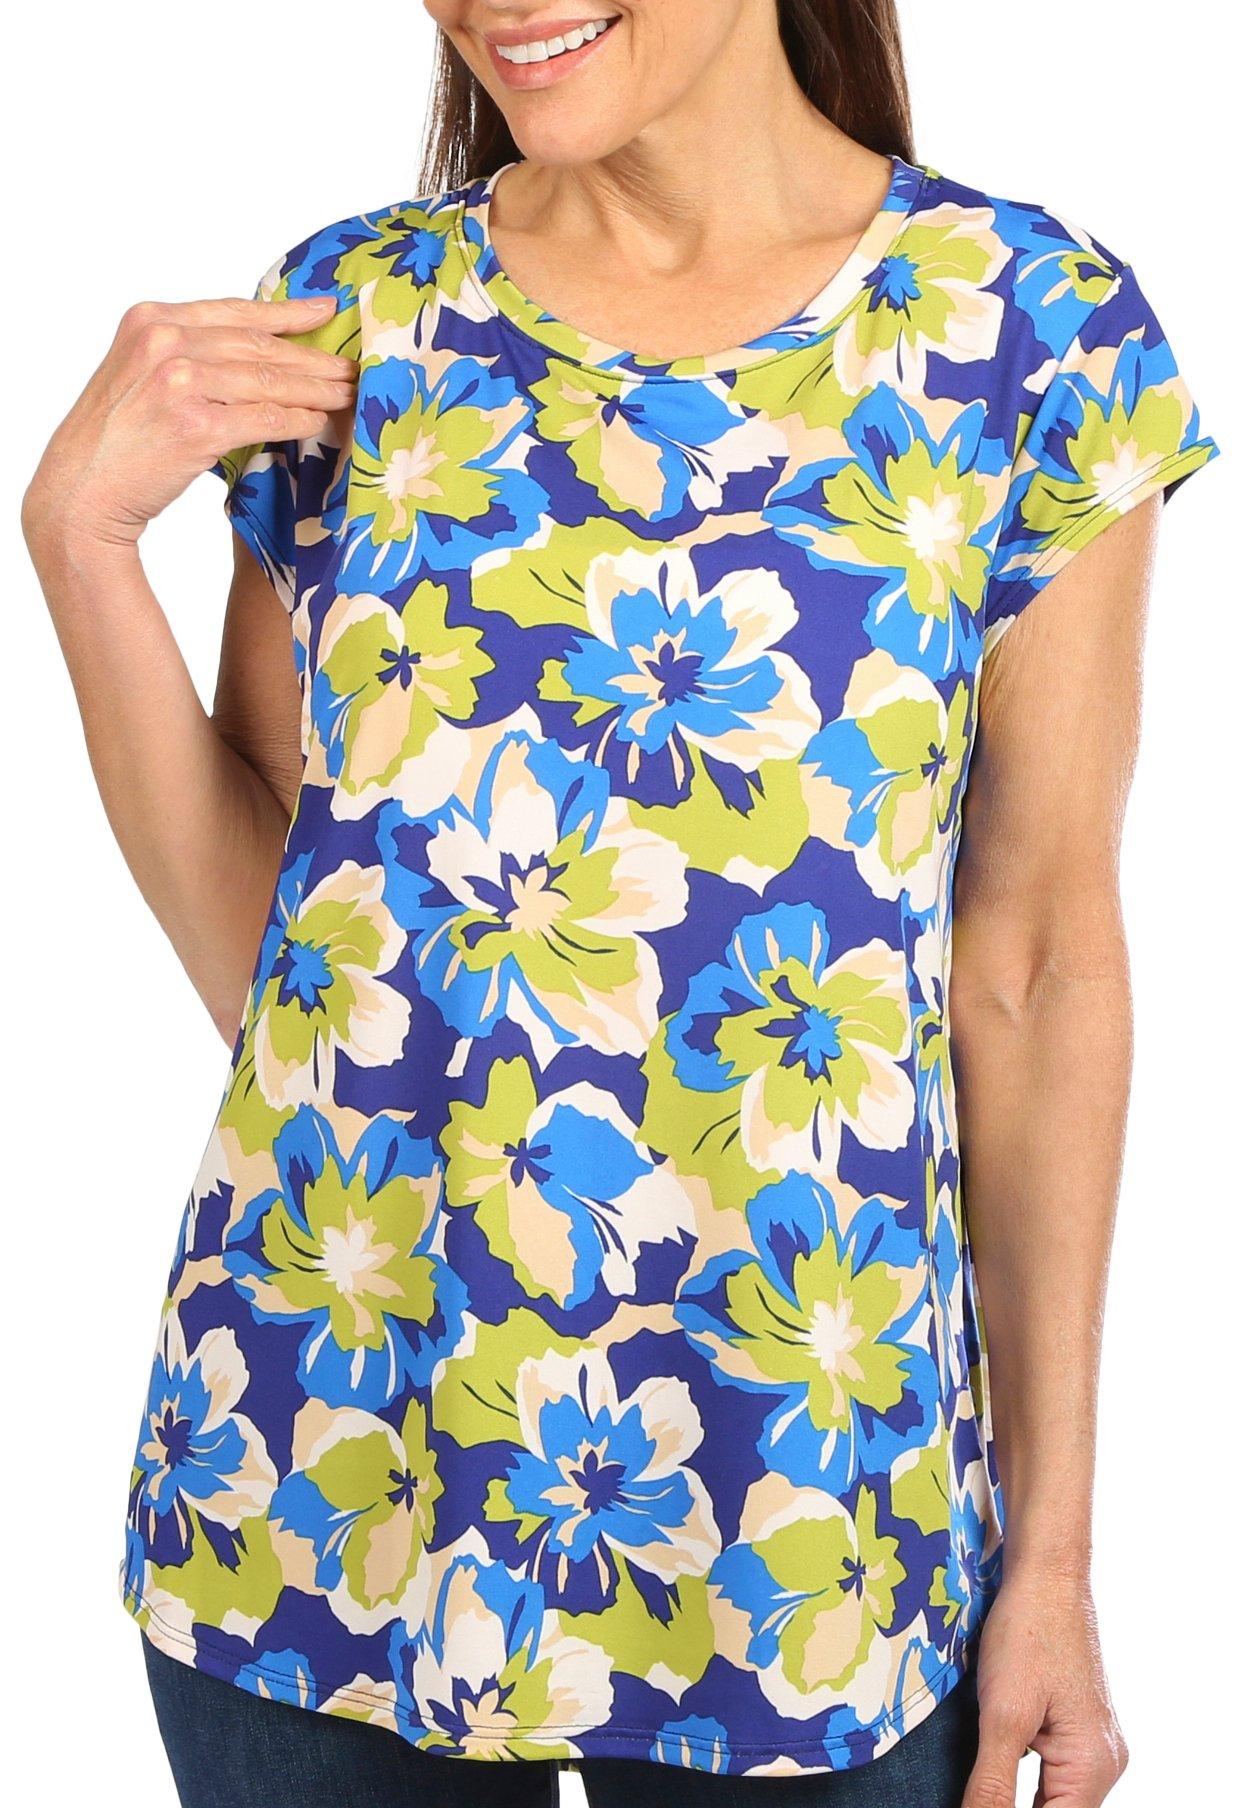 Womens Tropical Floral Print Cap Sleeve Top